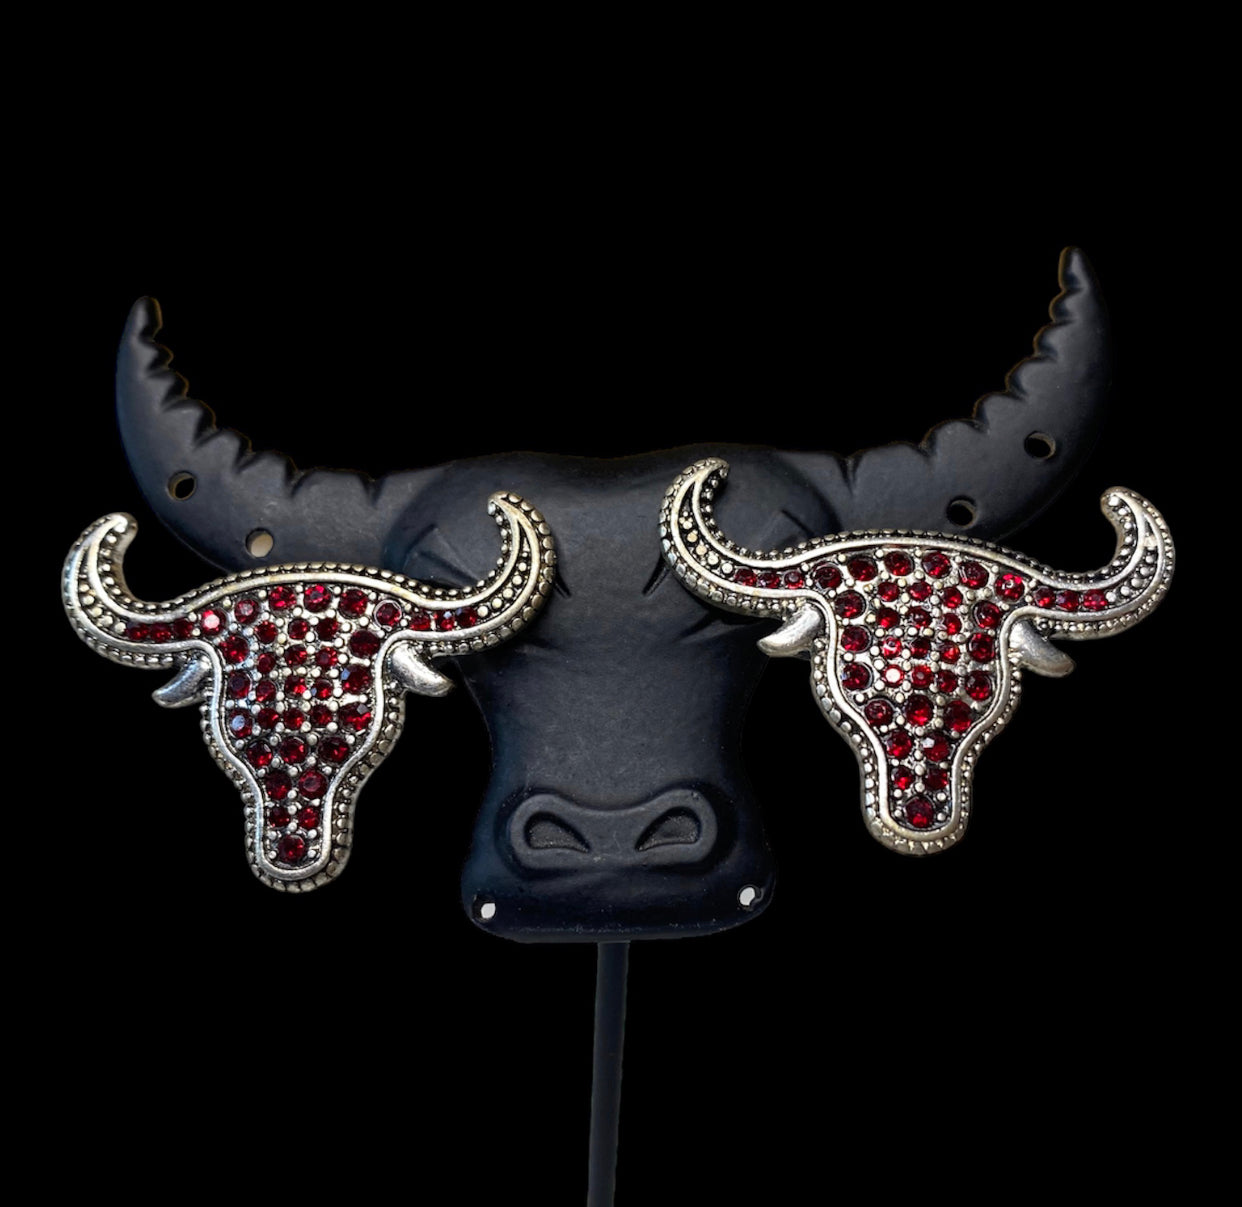 J6571b - Bling Steer Head Earrings